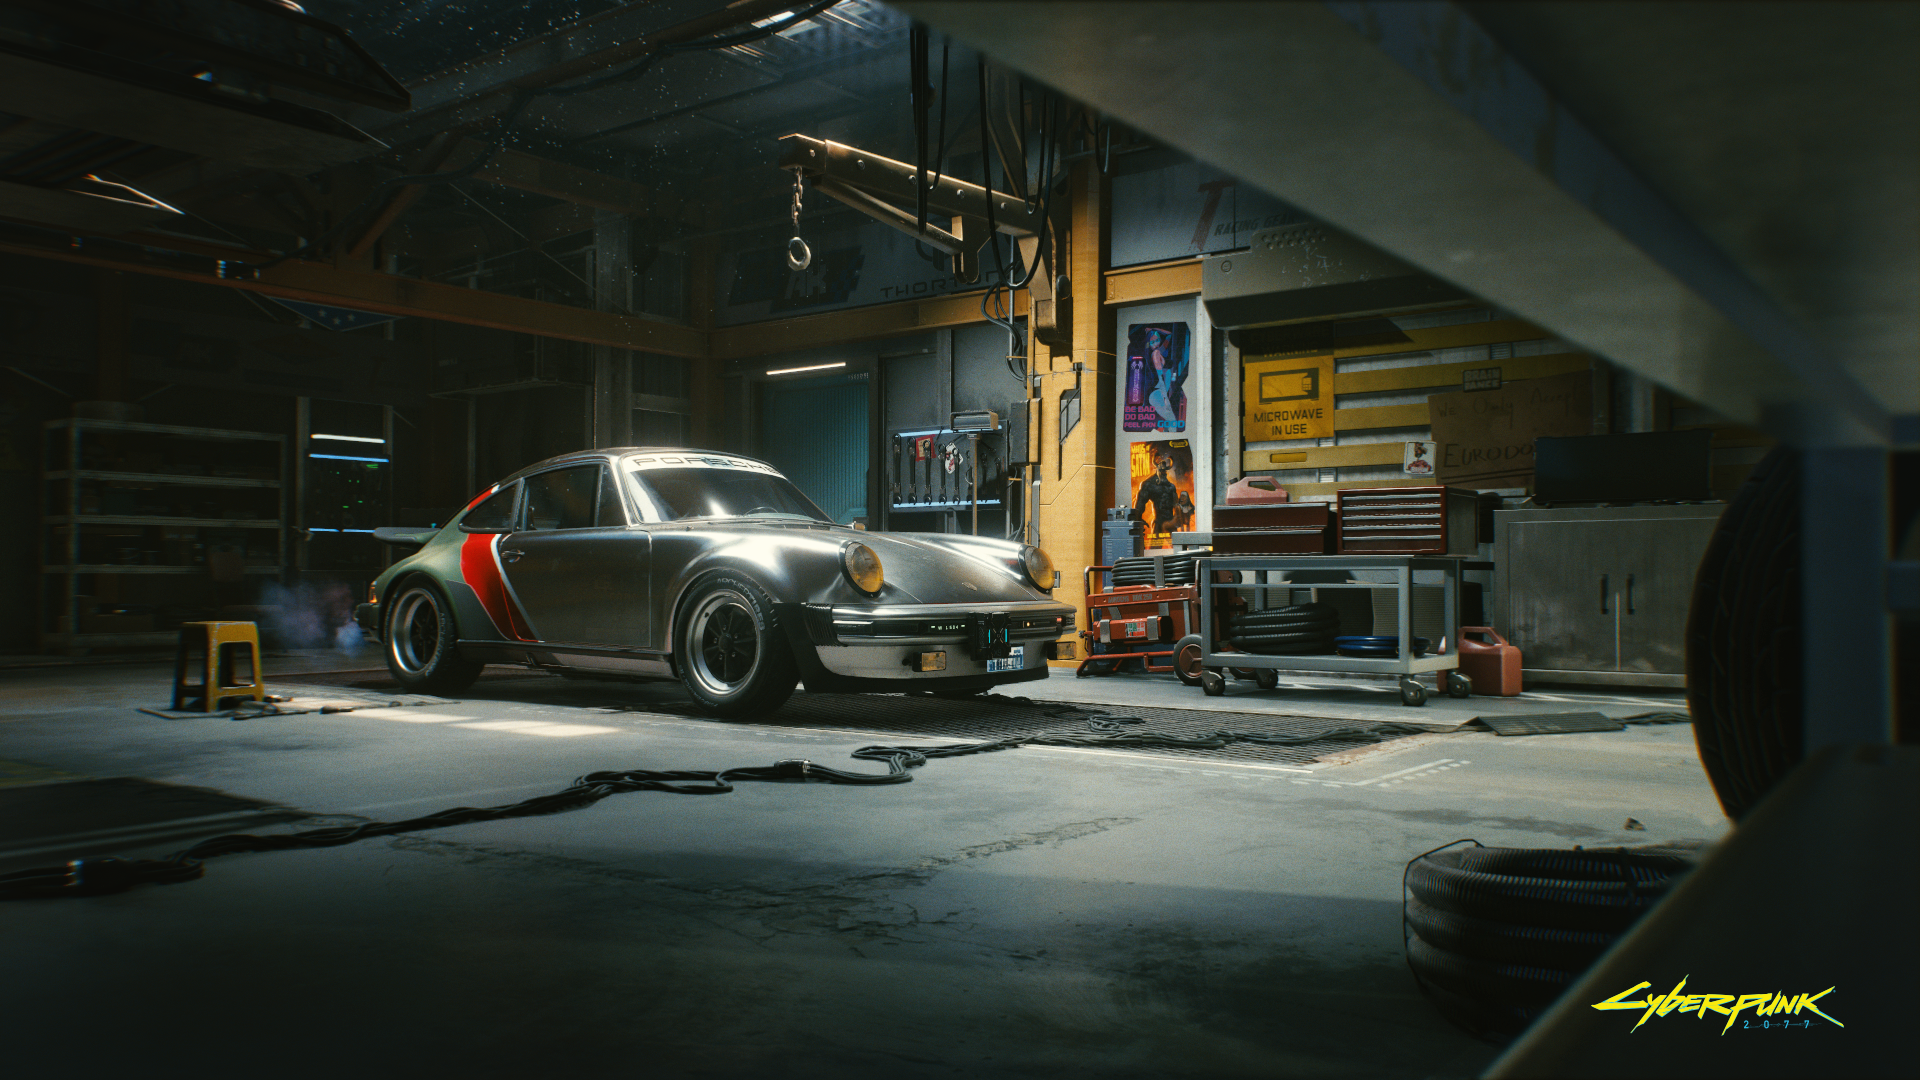 The Porsche 911 Turbo from Cyberpunk 2077 sitting in a garage